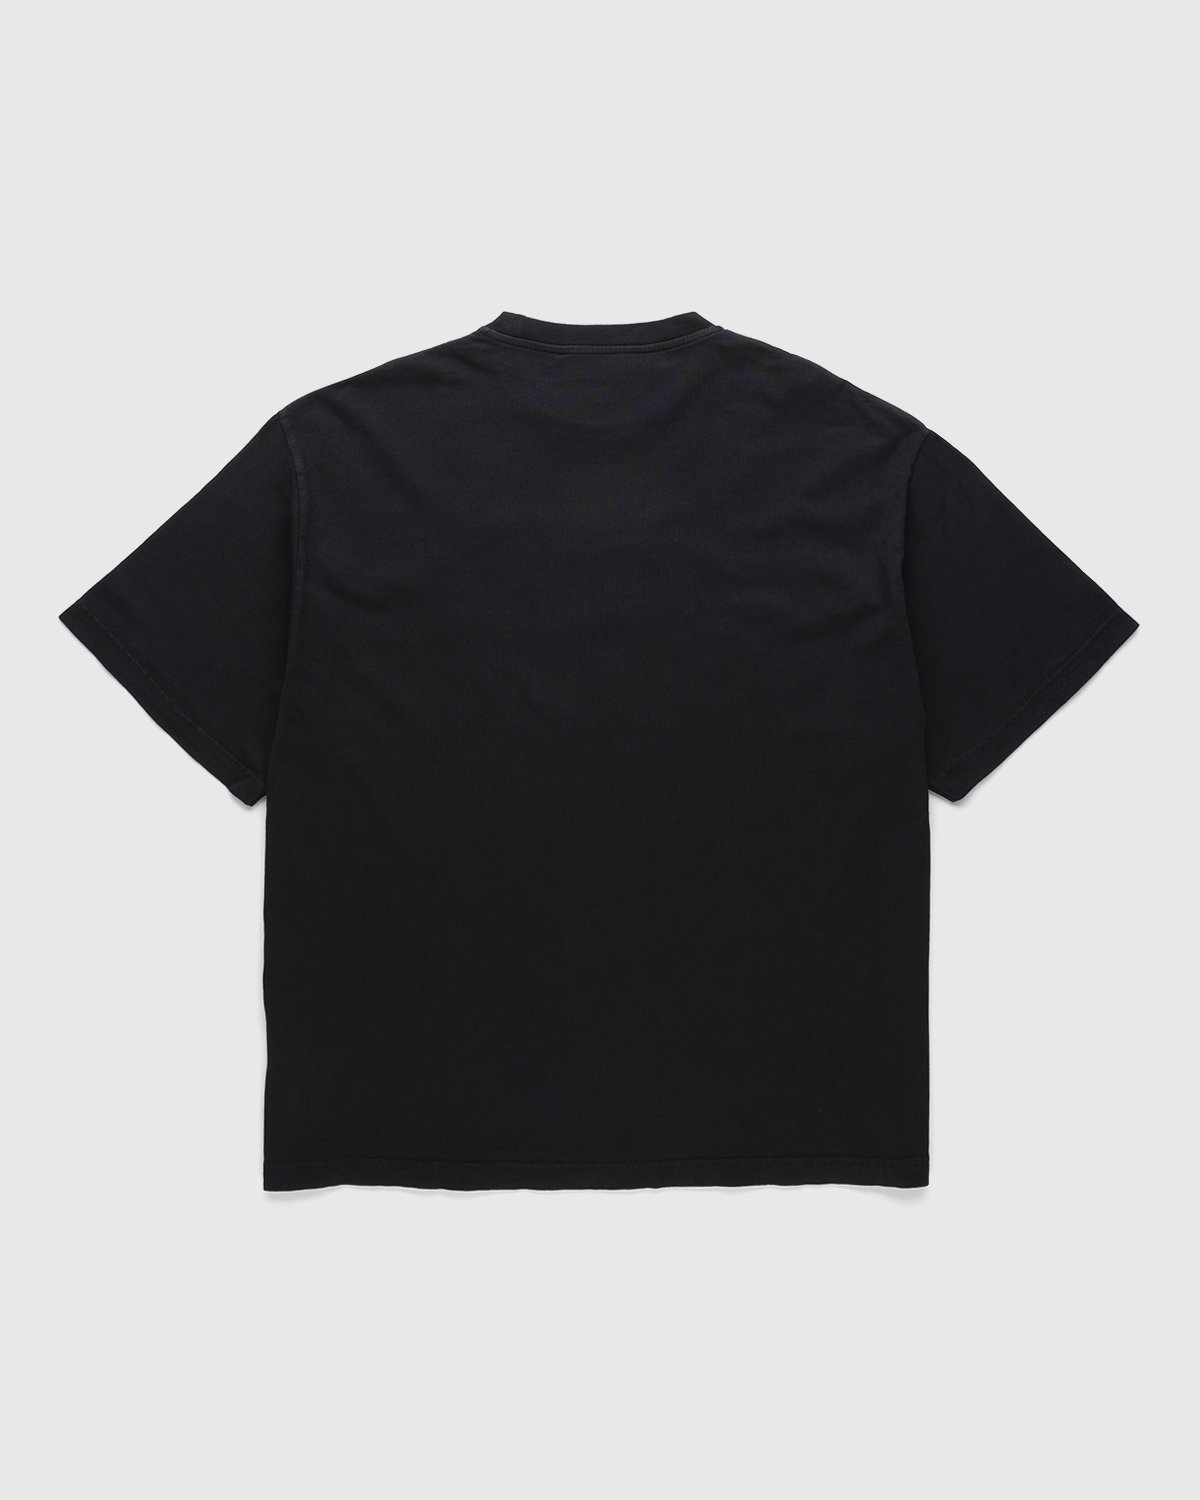 Acne Studios - Cotton Logo T-Shirt Black - Clothing - Black - Image 2